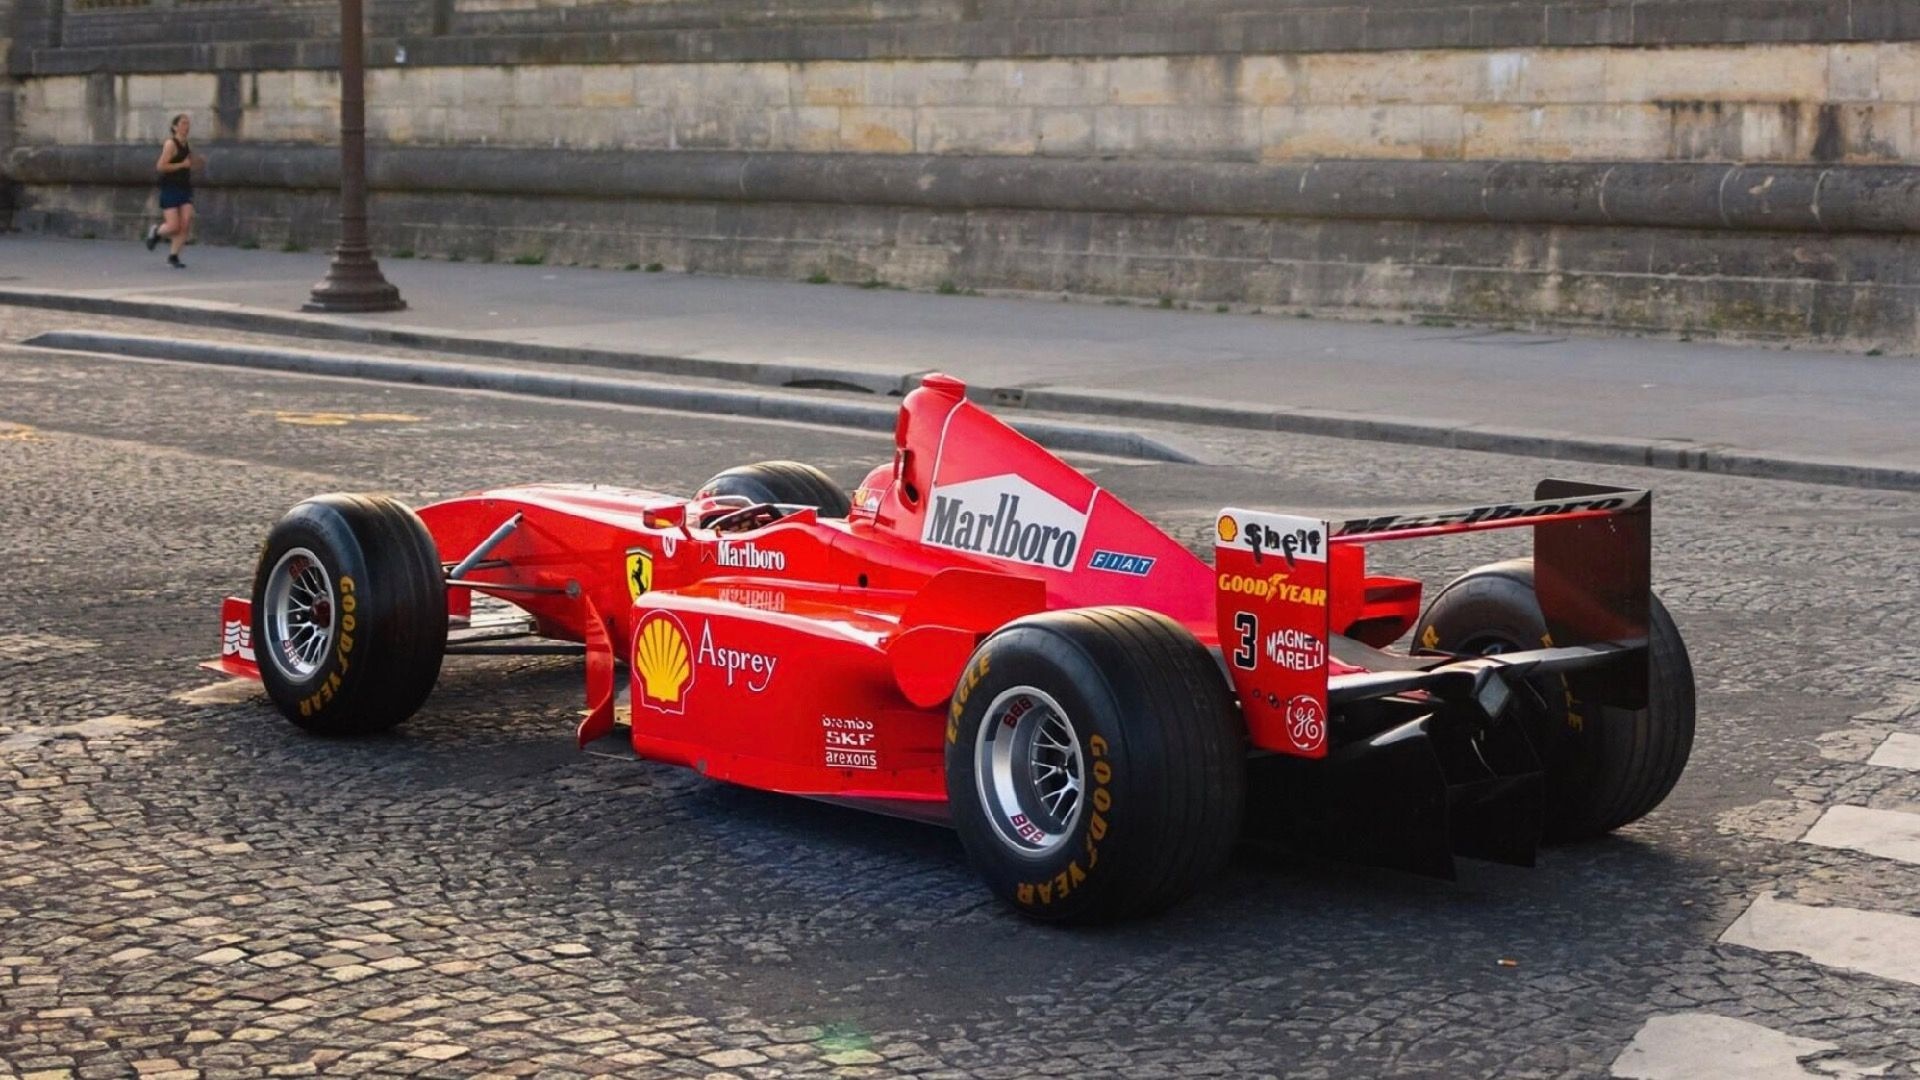 V-10 Schumacher Ferrari F1 Car Just Sold For $14.9 Million